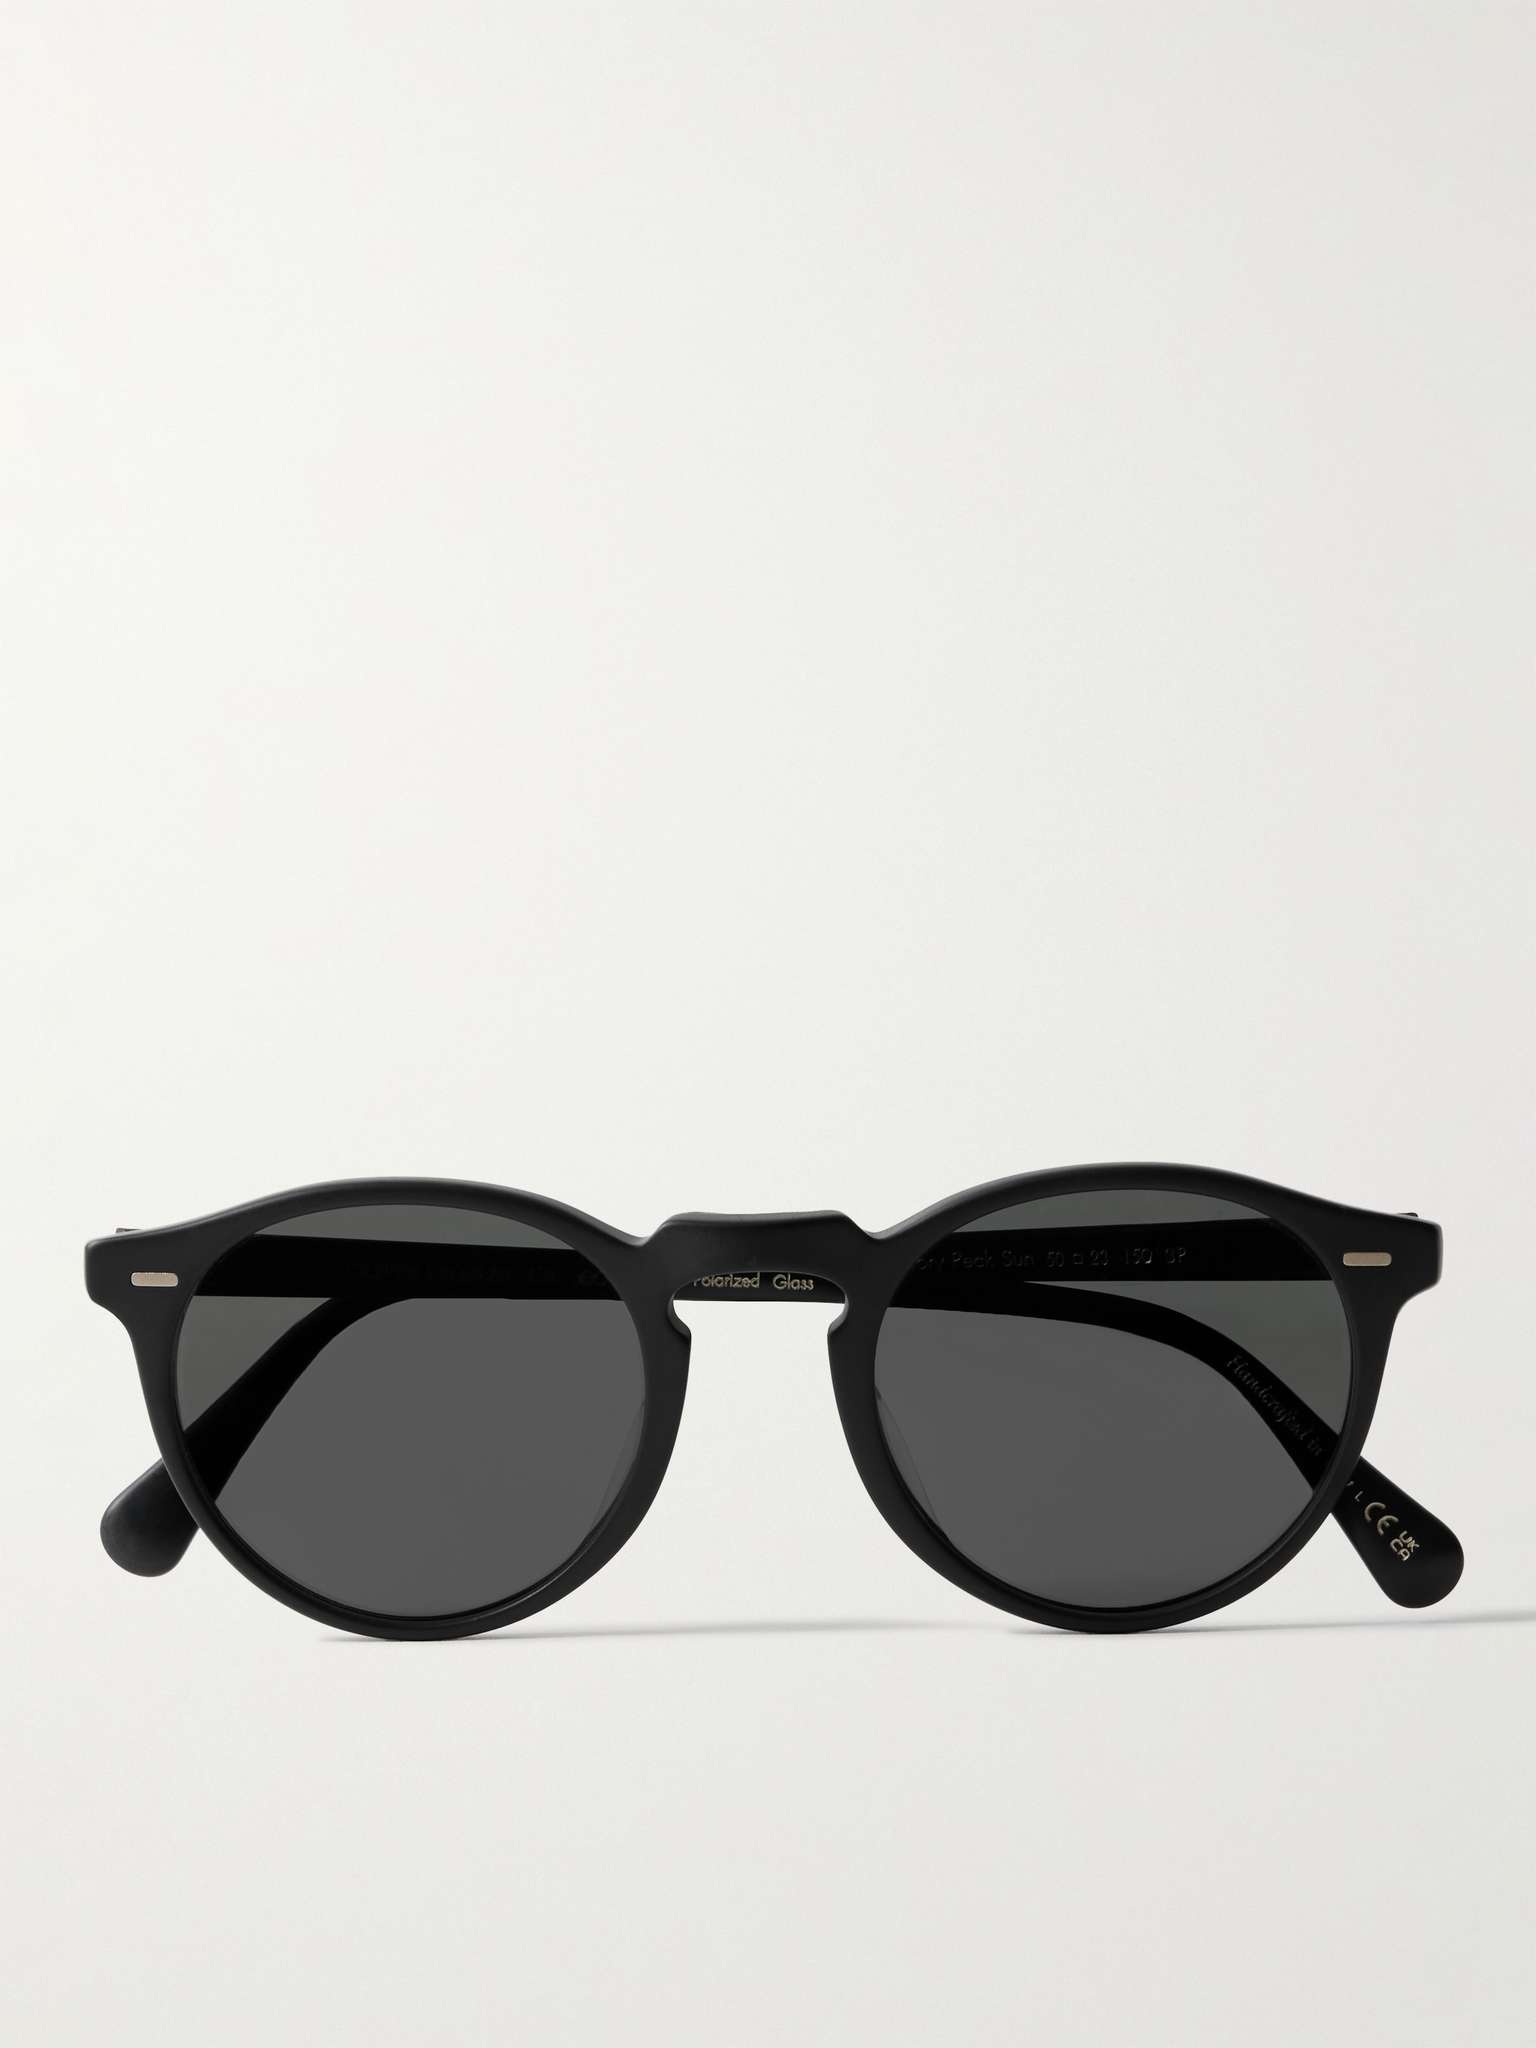 Gregory Peck Round-Frame Tortoiseshell Acetate Photochromic Sunglasses - 1